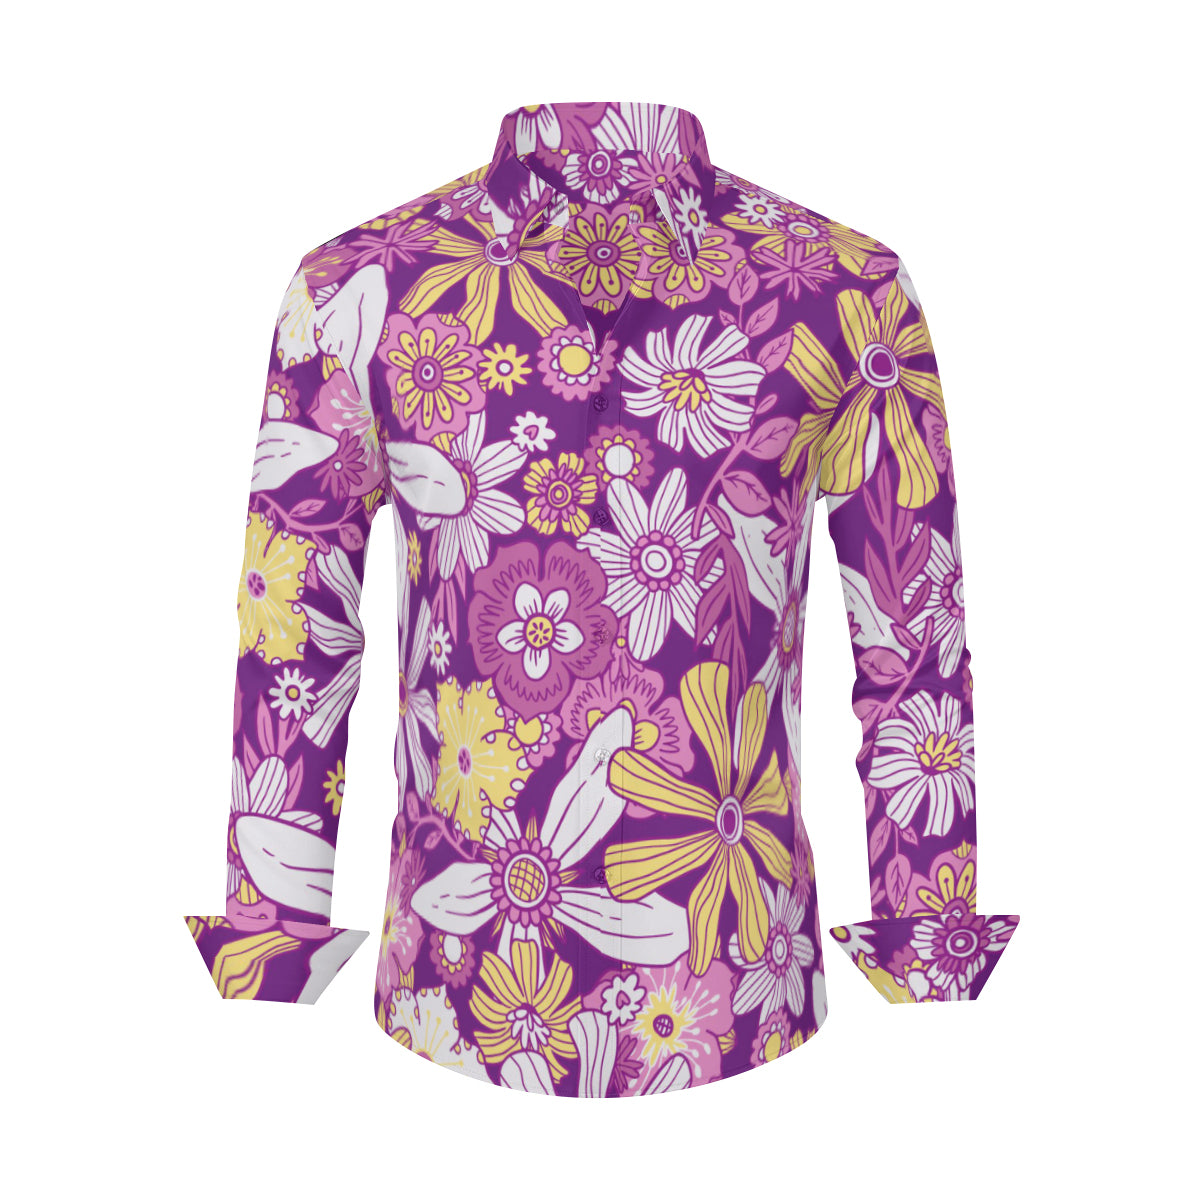 Vintage 70s style shirt, Retro Shirt Men, Purple Floral Shirt Men, Hippie Shirt Men, Purple Shirt Men, 70s Shirt Men, 70s inspired shirt